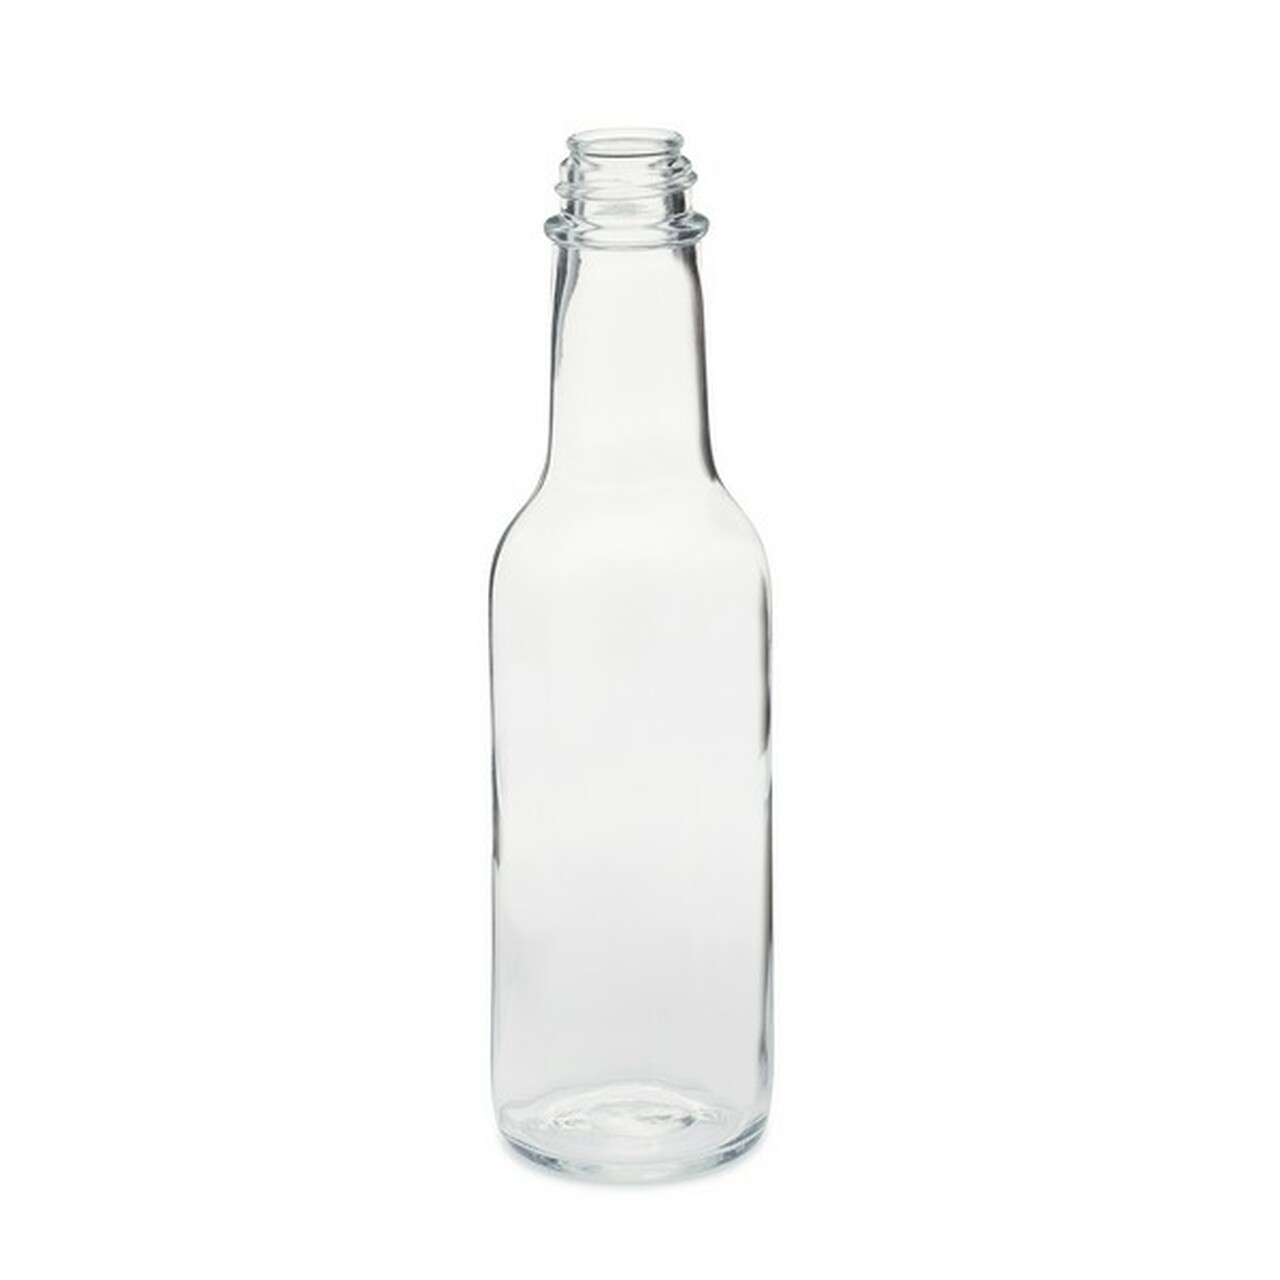 5oz Glass Woozy Bottle 24-414 Neck - No Cap - Cased 12 per - 216 Cases per Pallet - 1 Pallet MOQ - Rock Bottom Bottles / Packaging Company LLC